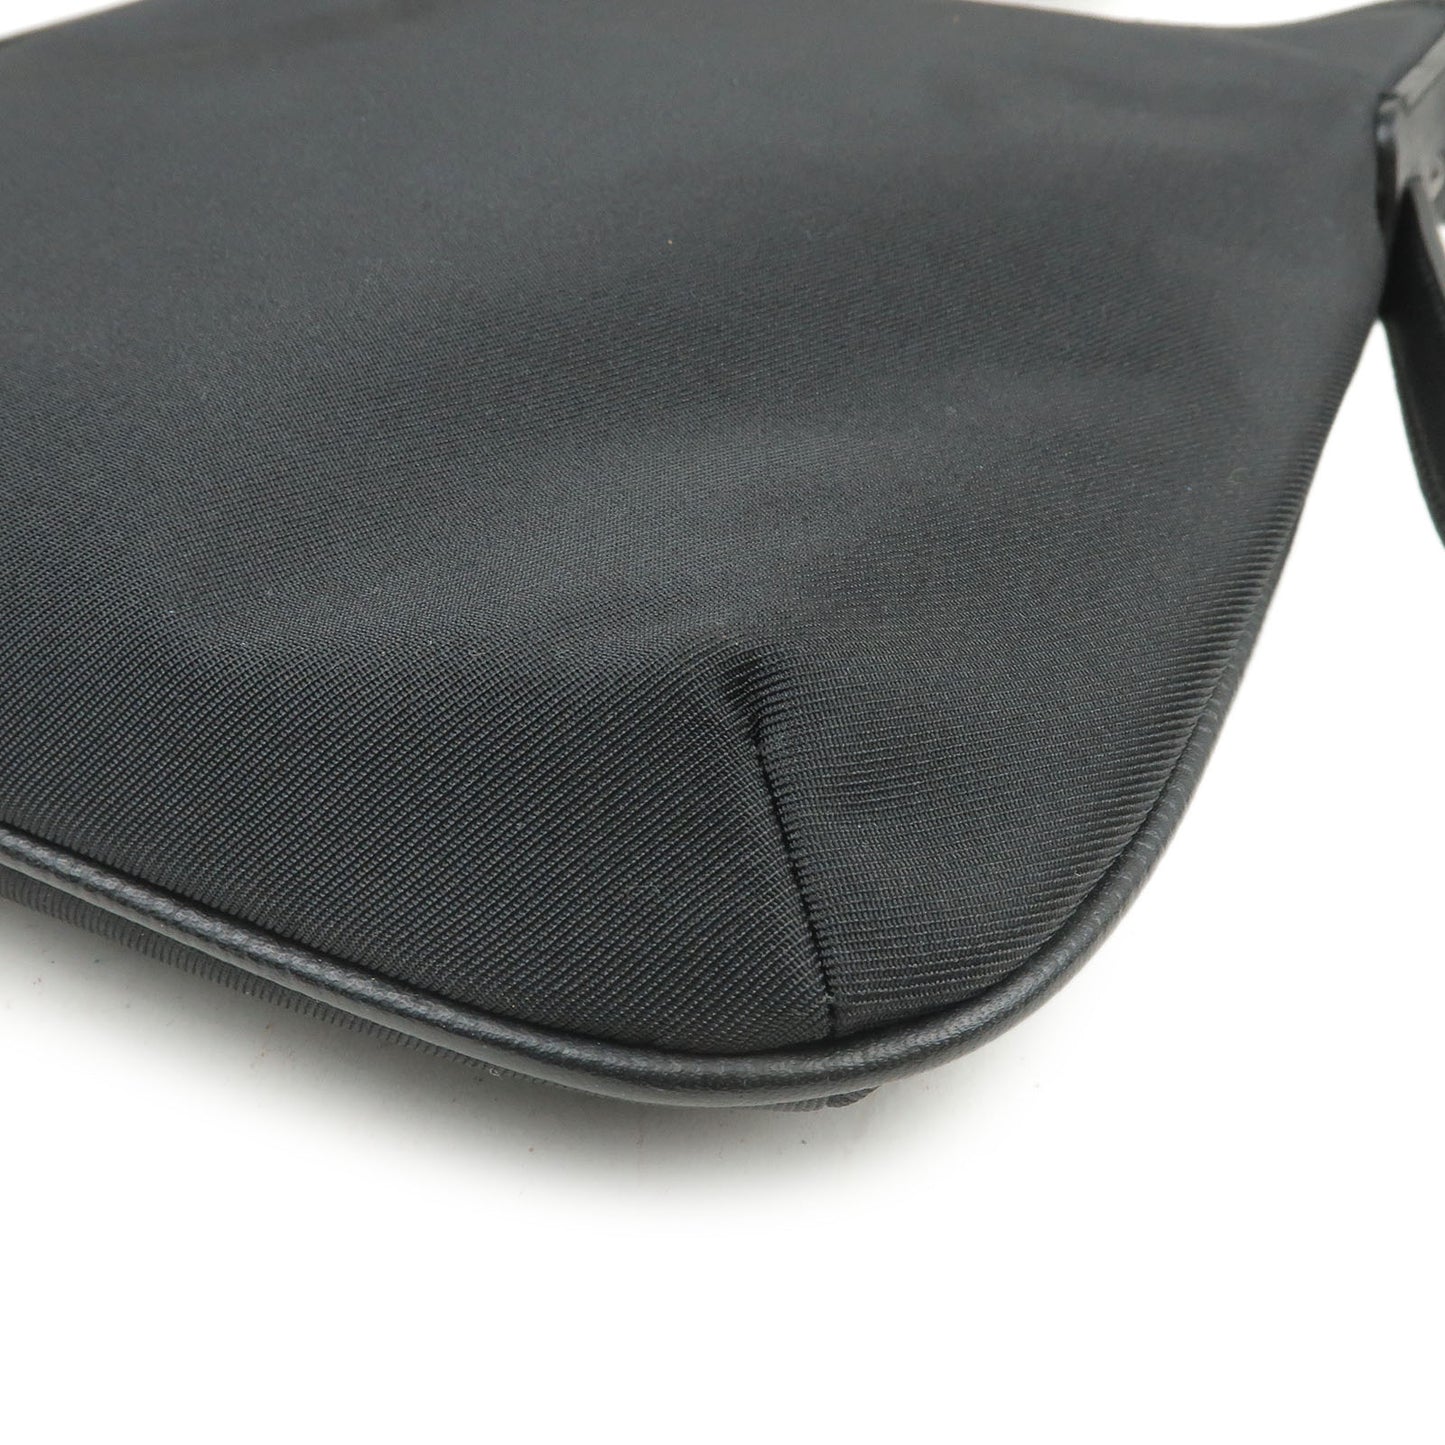 BURBERRY Nova Plaid Nylon Canvas Leather Shoulder Bag Beige